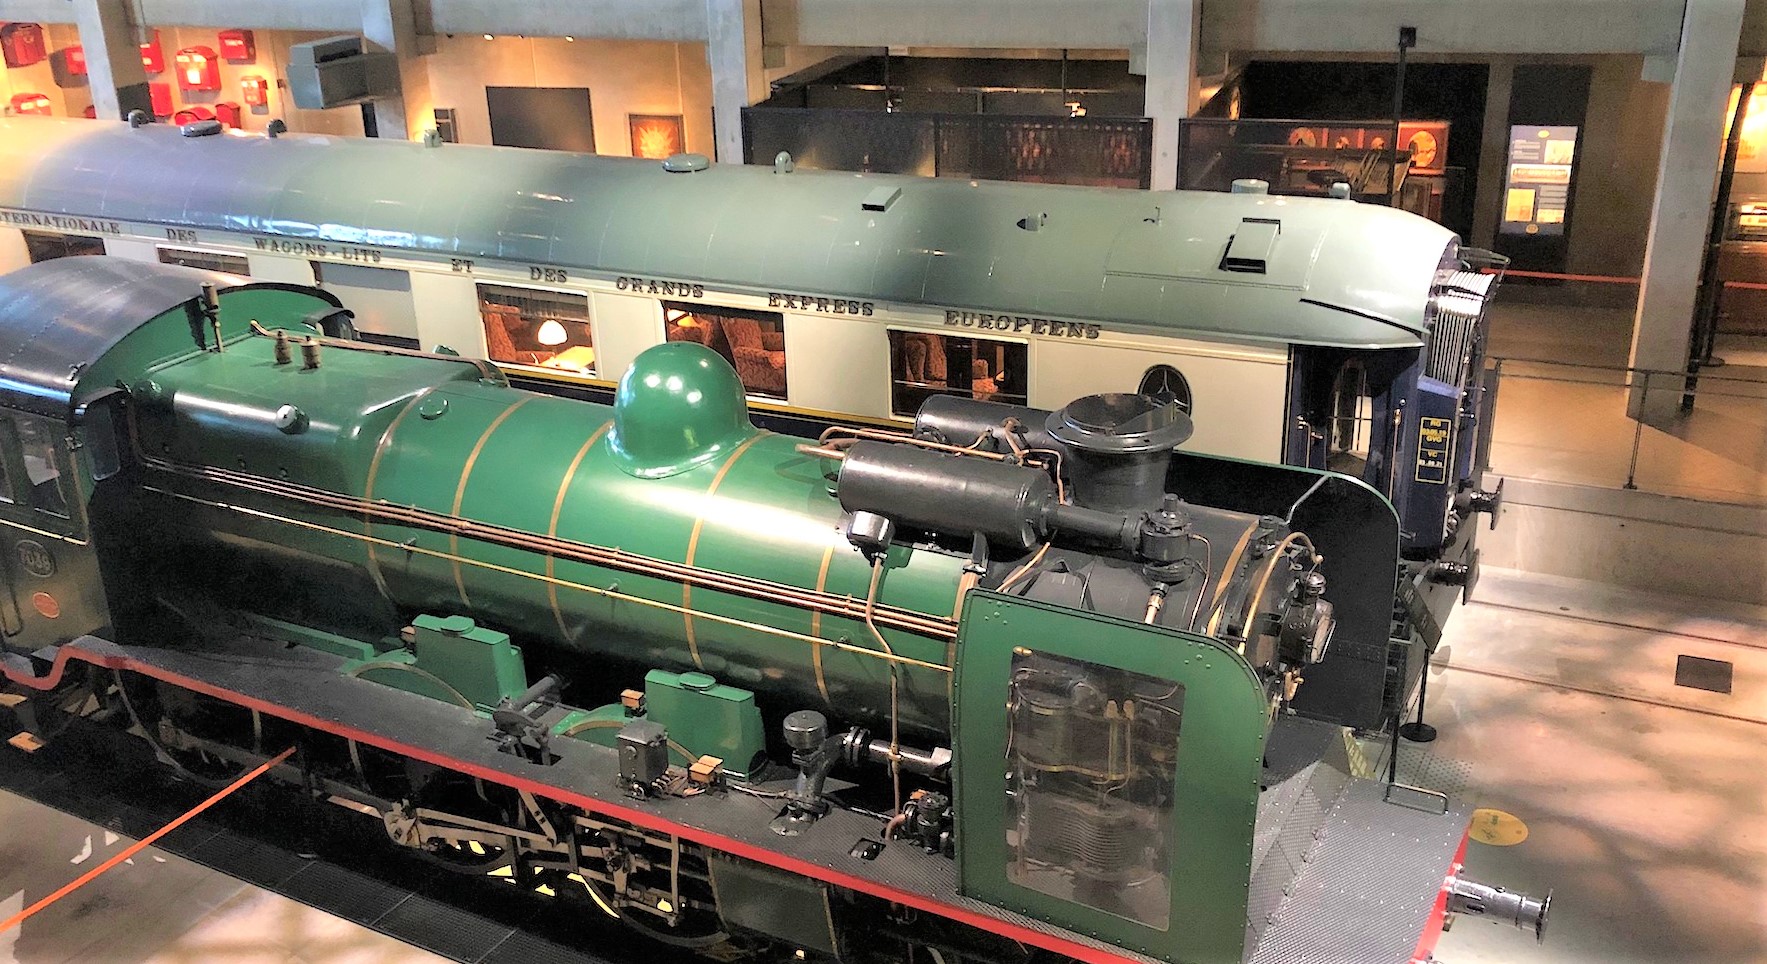 Orient-Express exhibition at Train World in Brussels' Schaerbeek